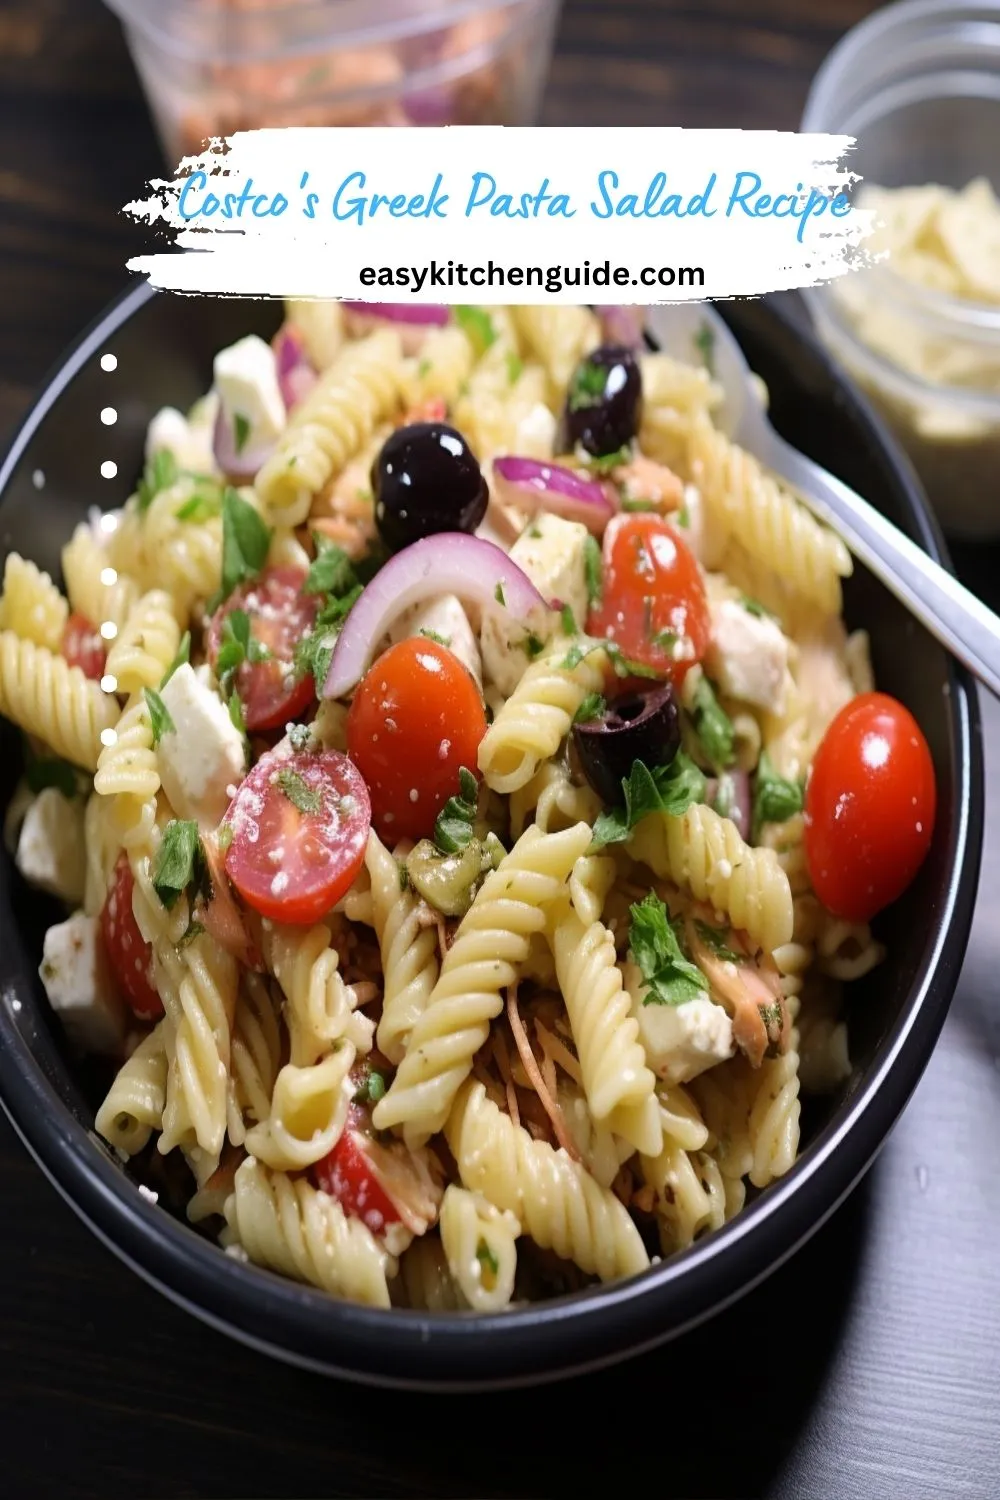 Costco’s Greek Pasta Salad Recipe